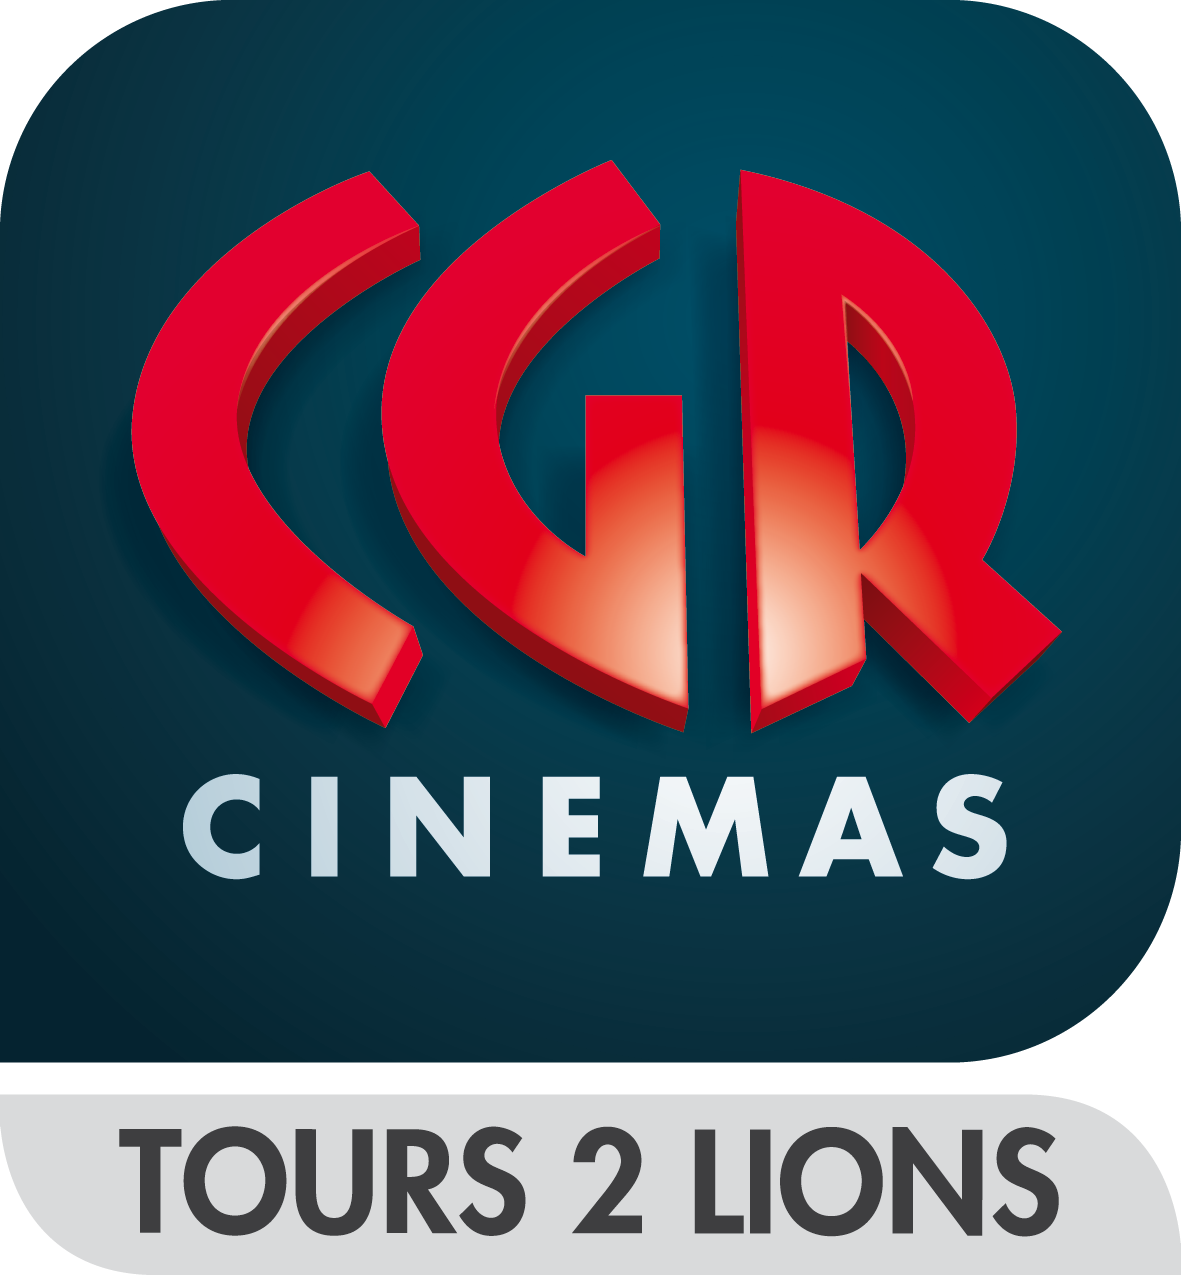 oppenheimer cgr tours 2 lions